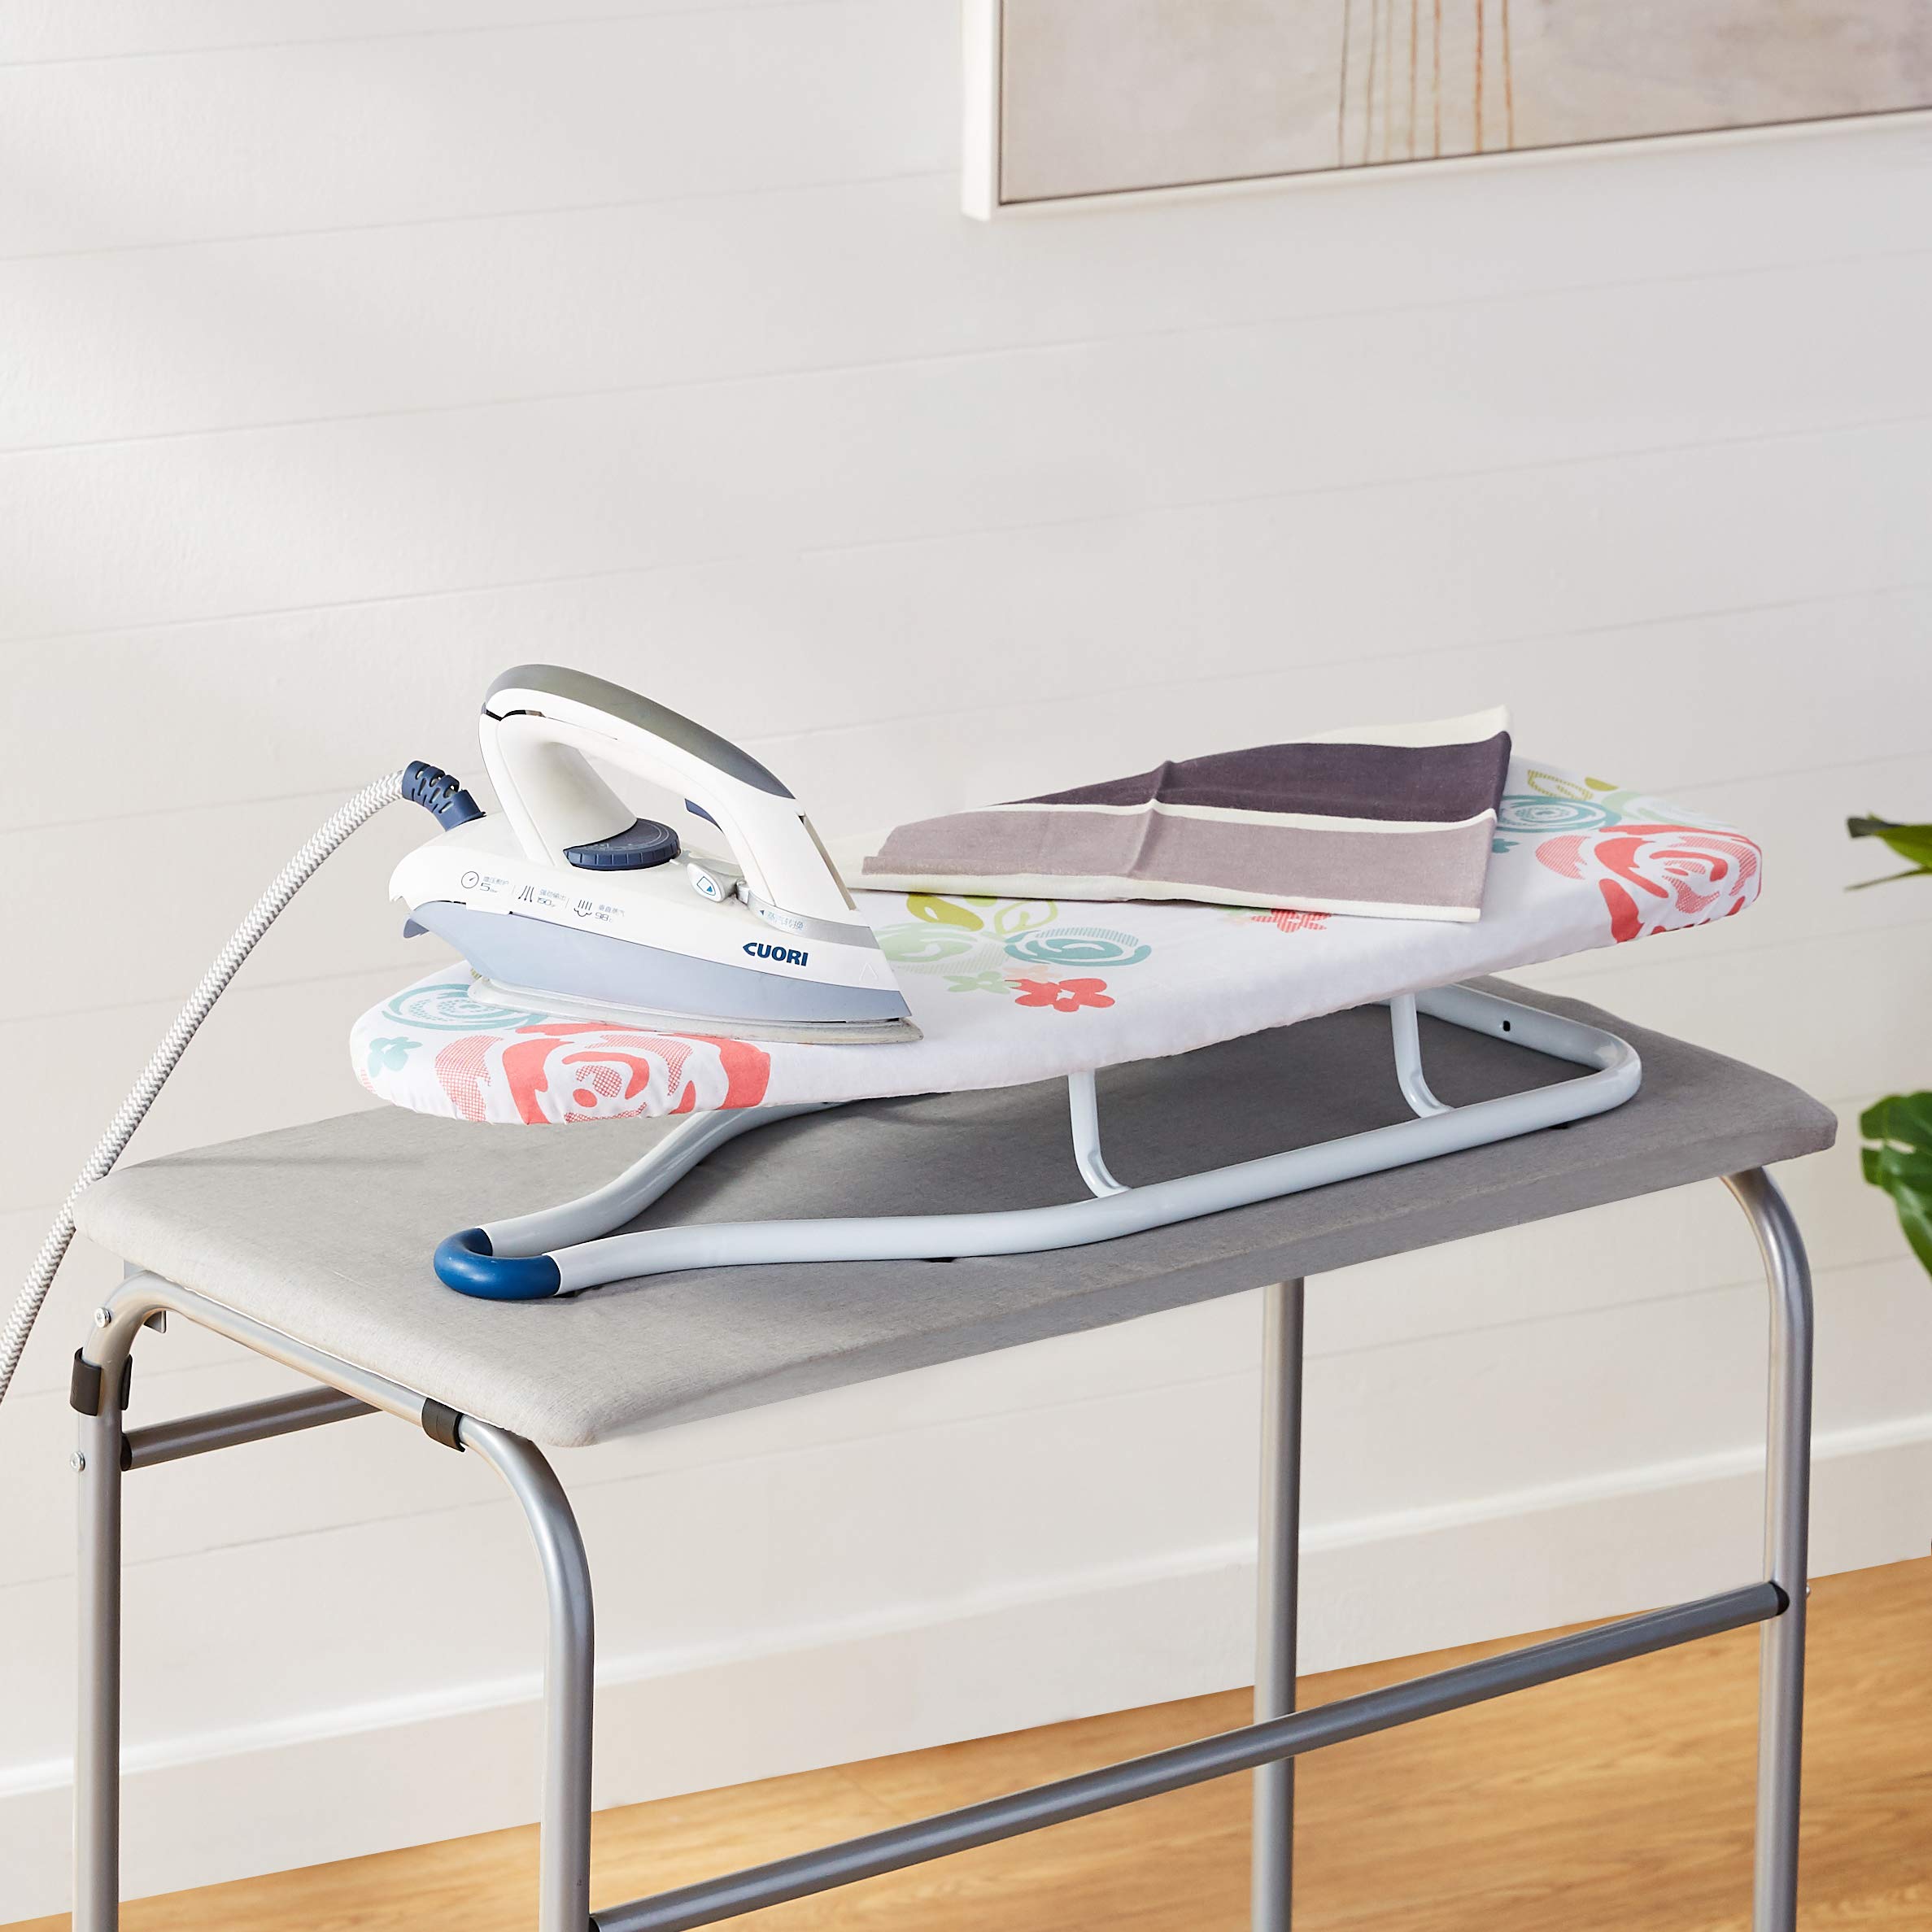 Amazon Basics Ironing Board Tabletop 77x29 cm, White, Floral